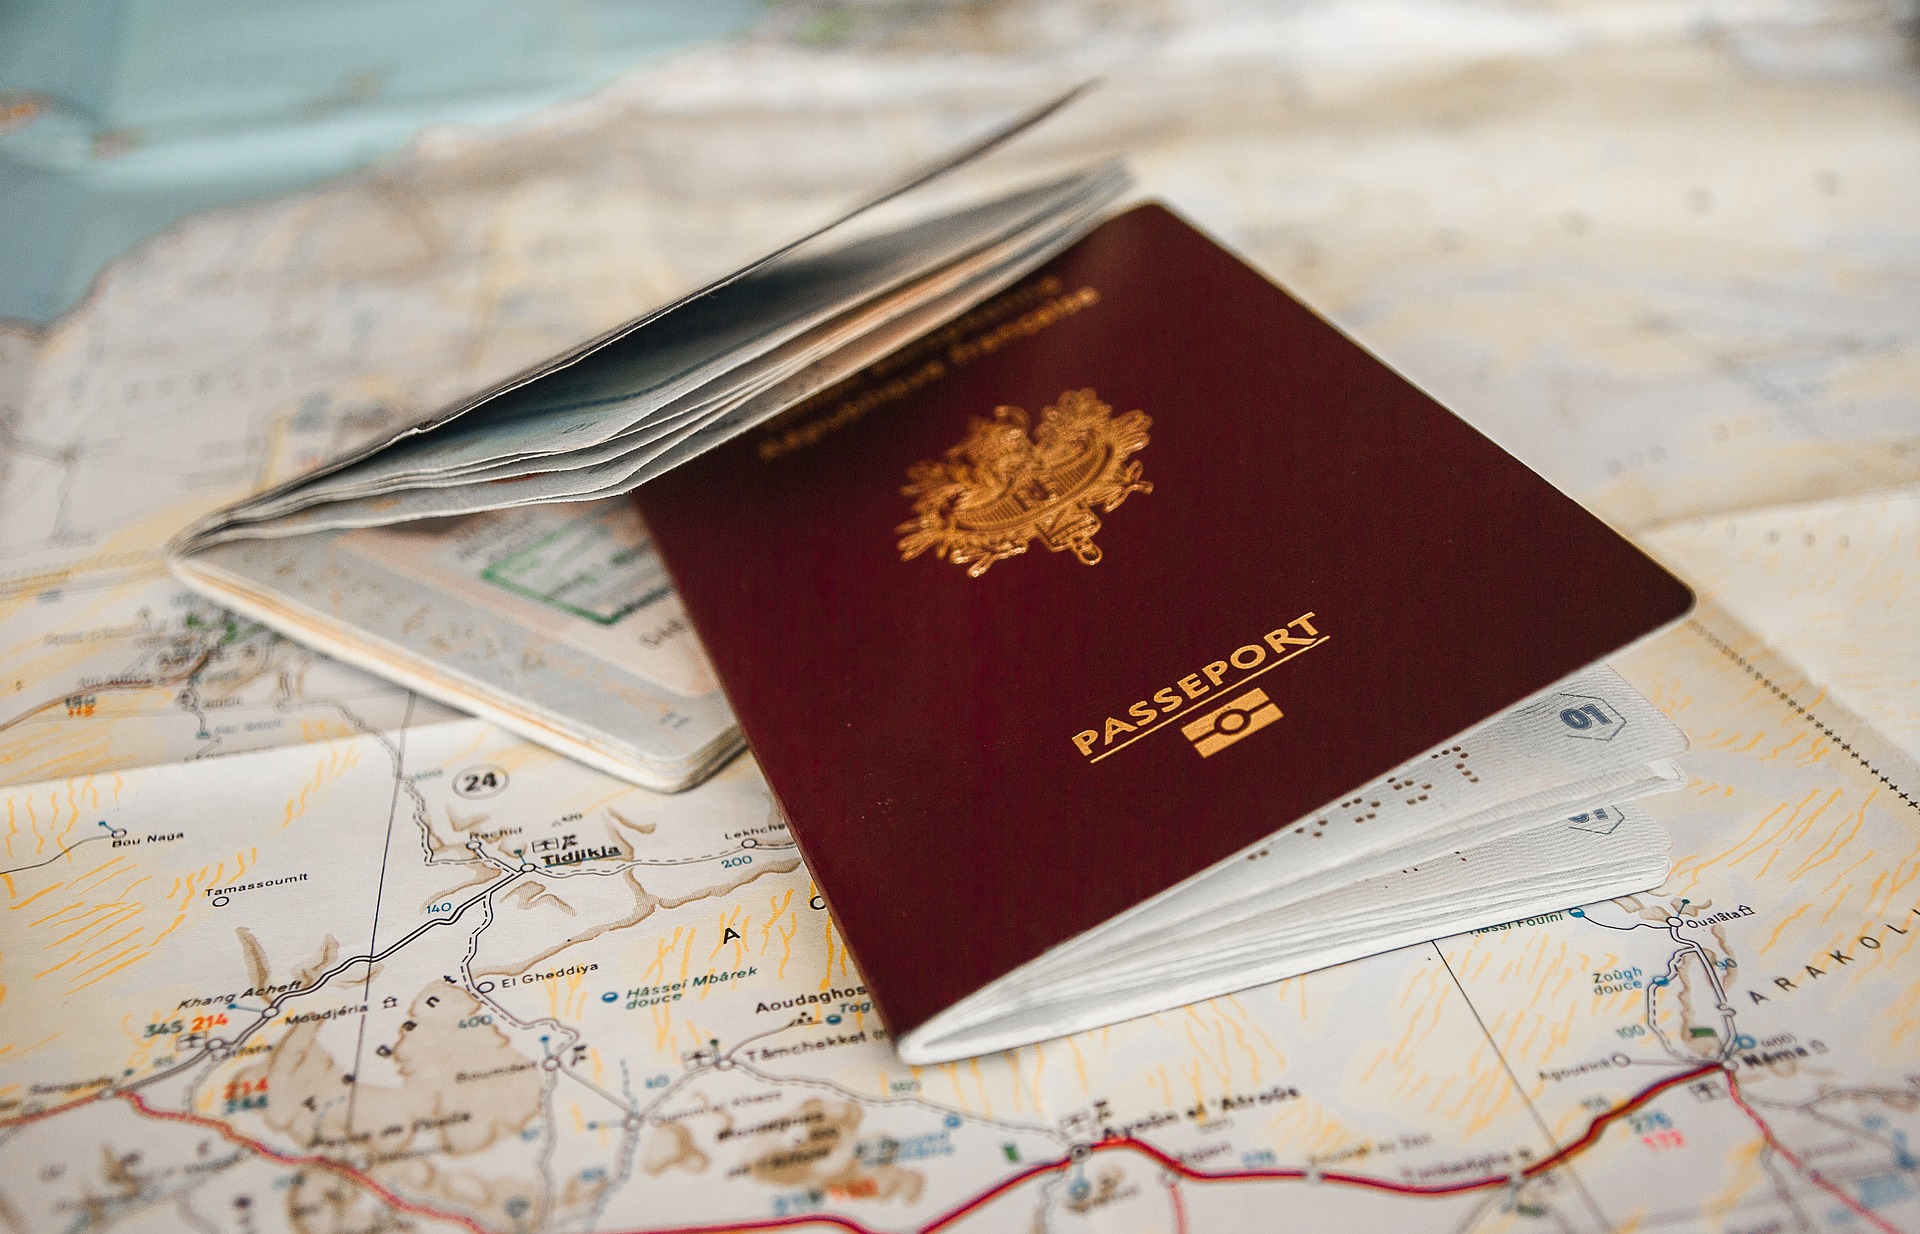 Buy Personalized Couple Passport Covers & Holders in UAE - Custom Factory -  UAE